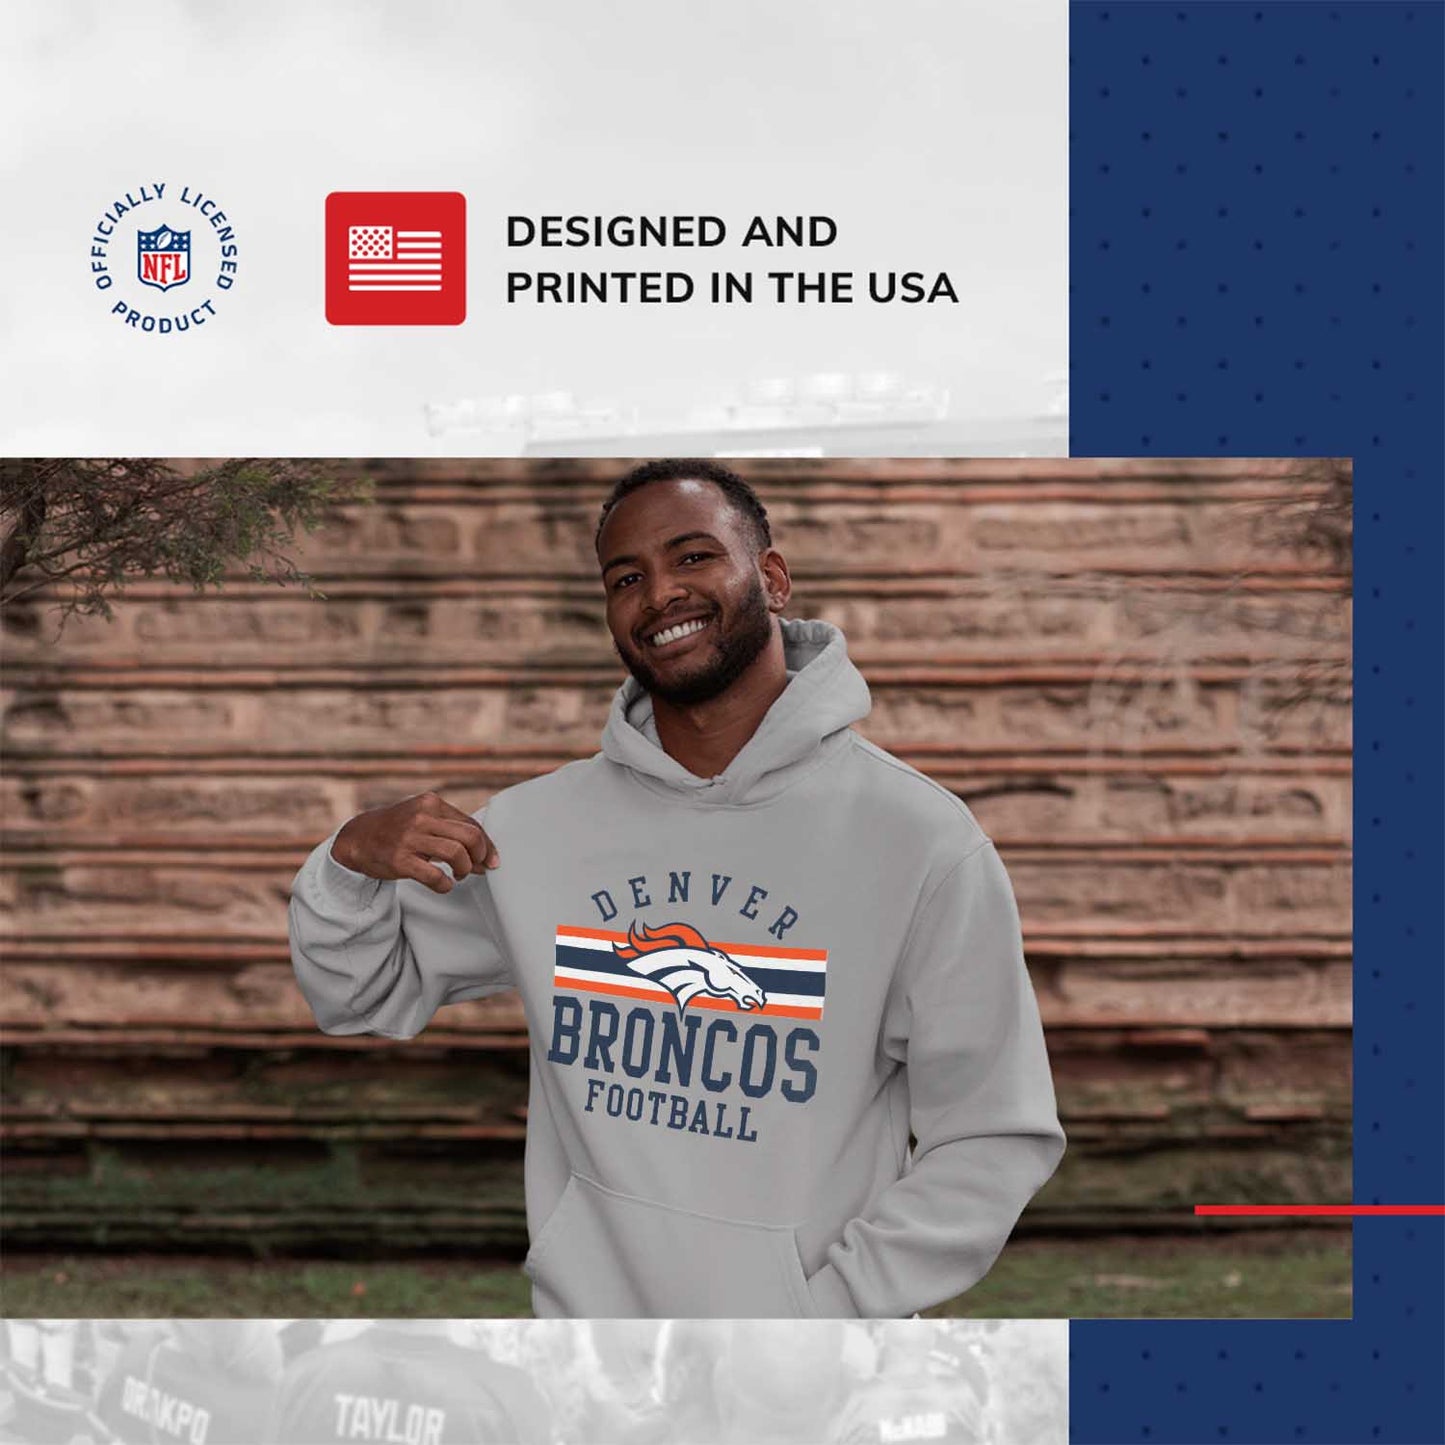 Denver Broncos NFL Team Stripe Hooded Sweatshirt- Soft Pullover Sports Hoodie For Men & Women - Sport Gray